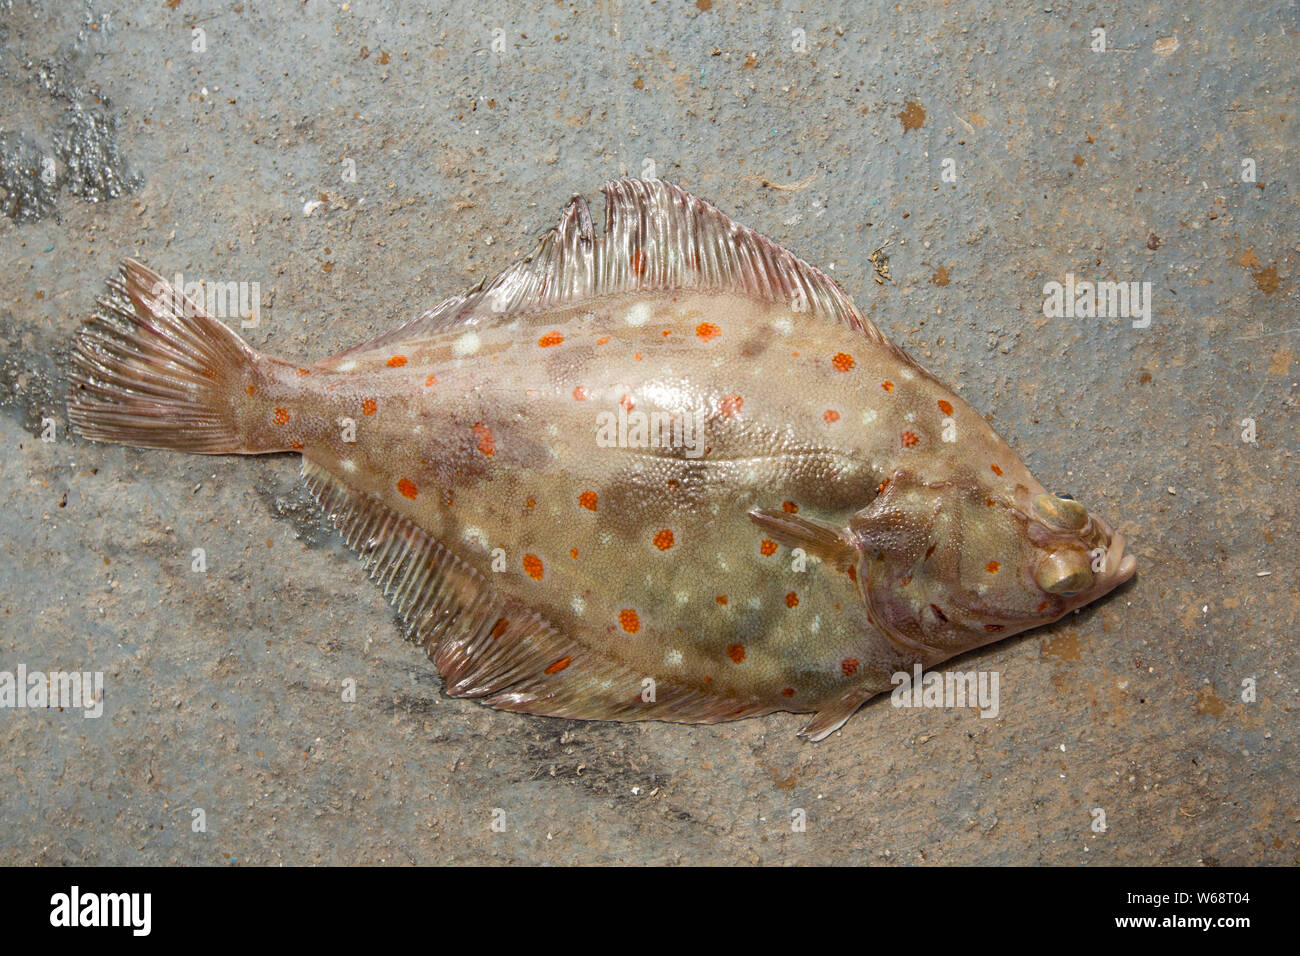 Flatfish camouflage hi-res stock photography and images - Alamy